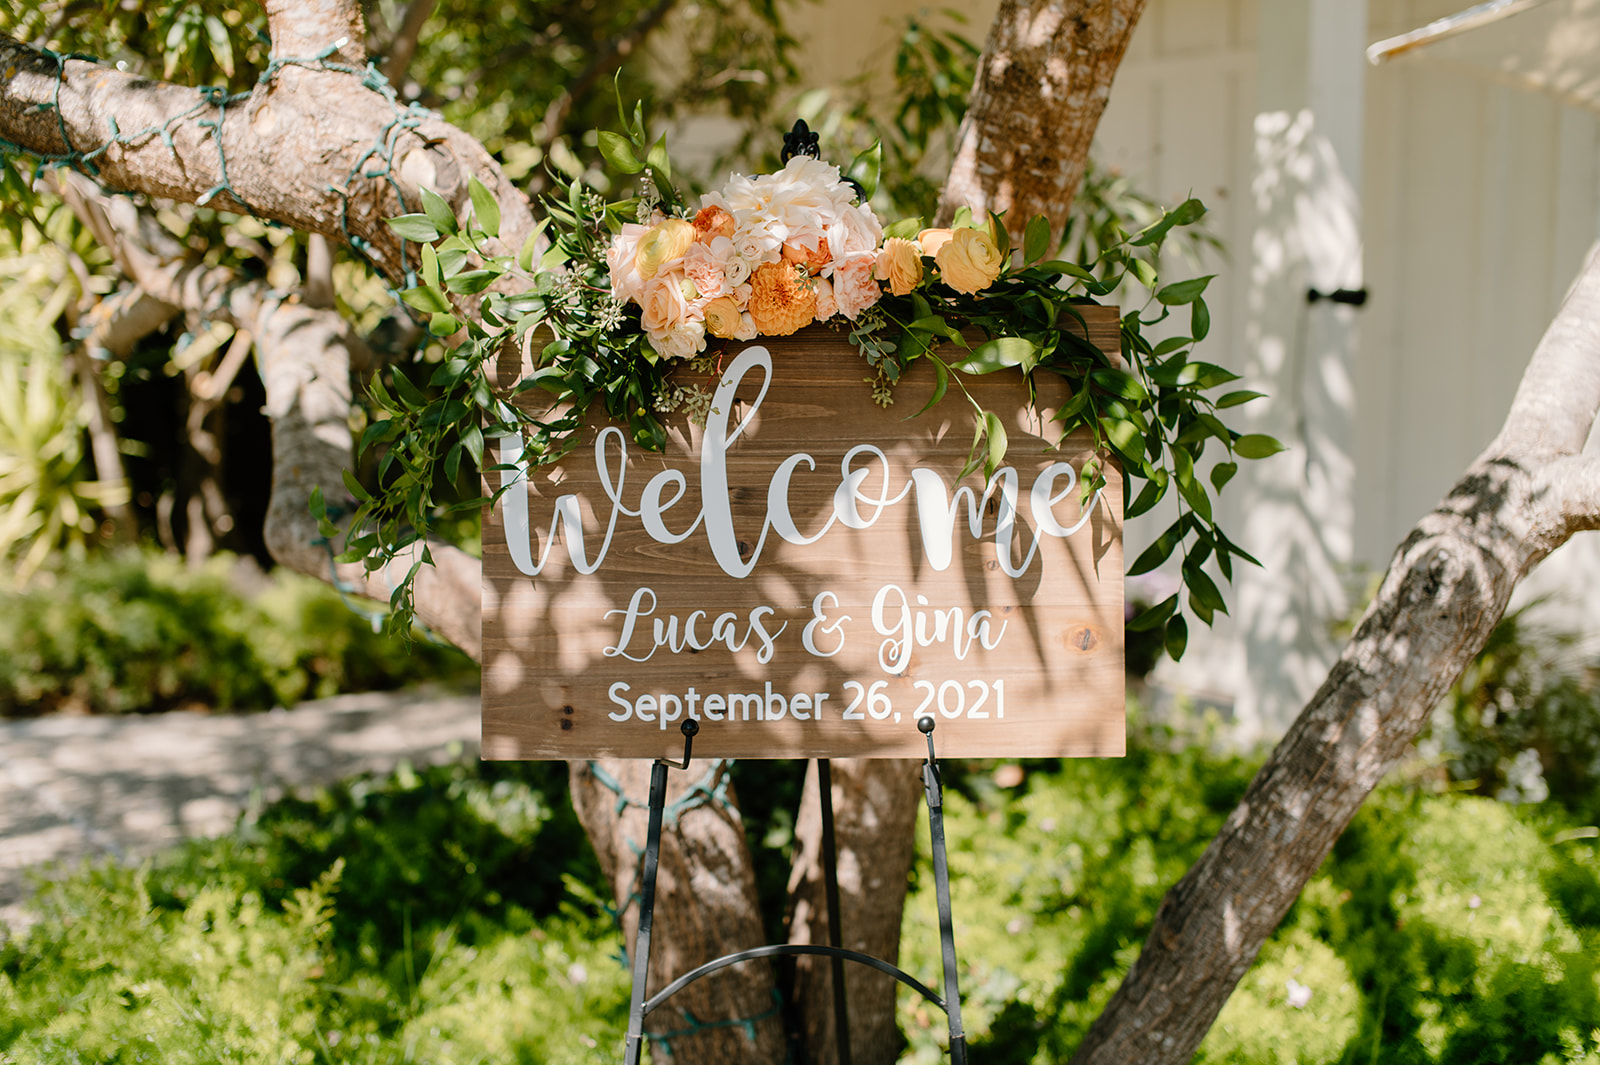 Sydney Jai Photography - Petaluma wedding, wedding details, wedding reception decor, wedding signs